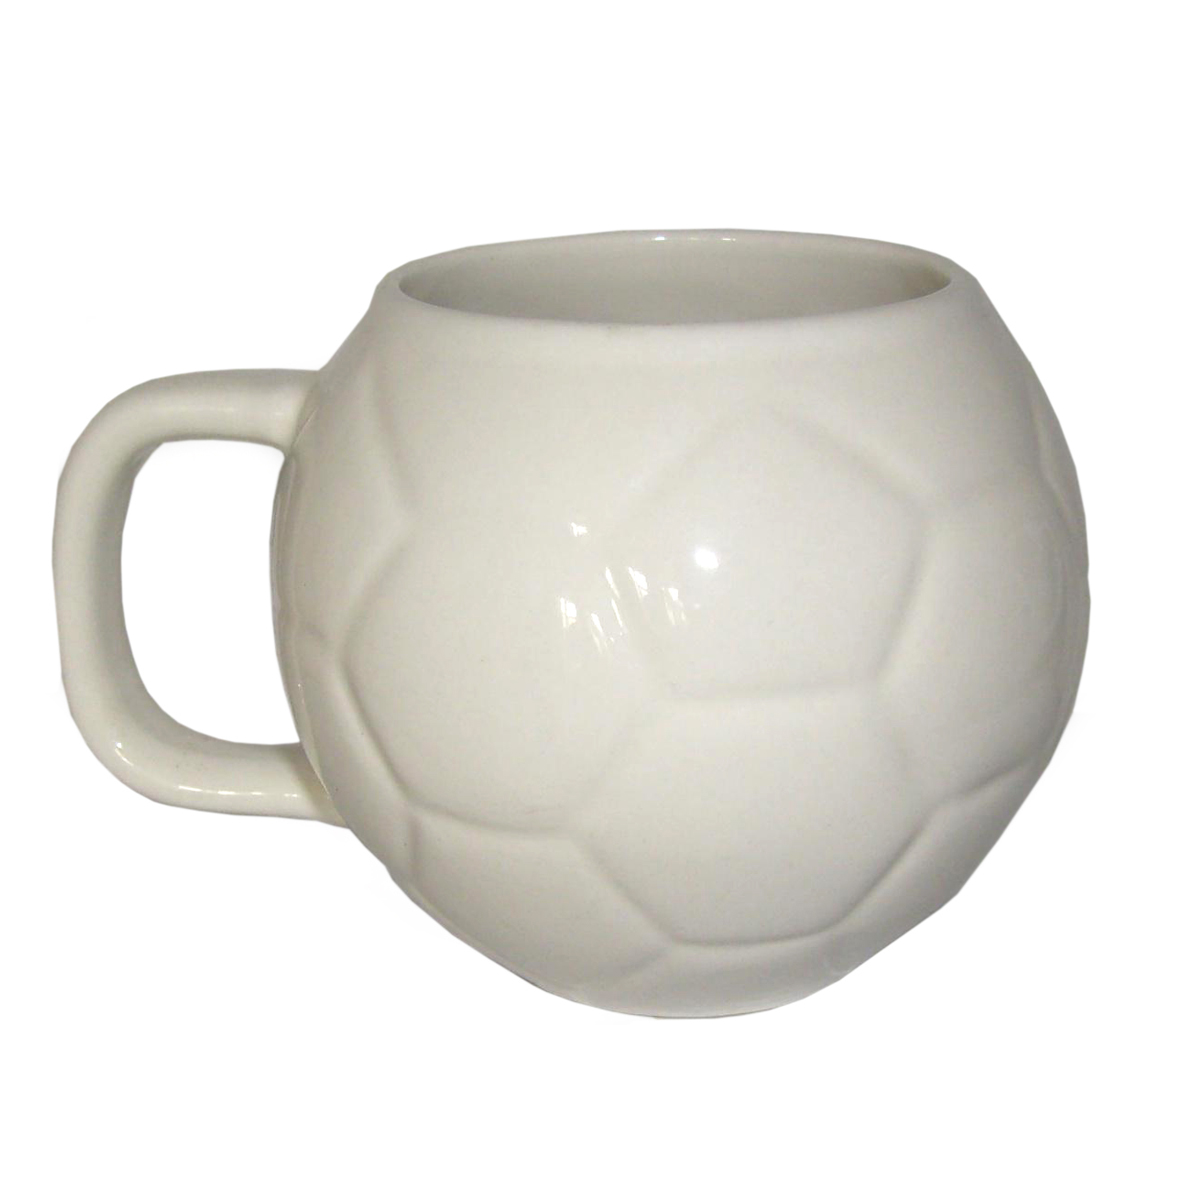 Football shaped white ceramic mug